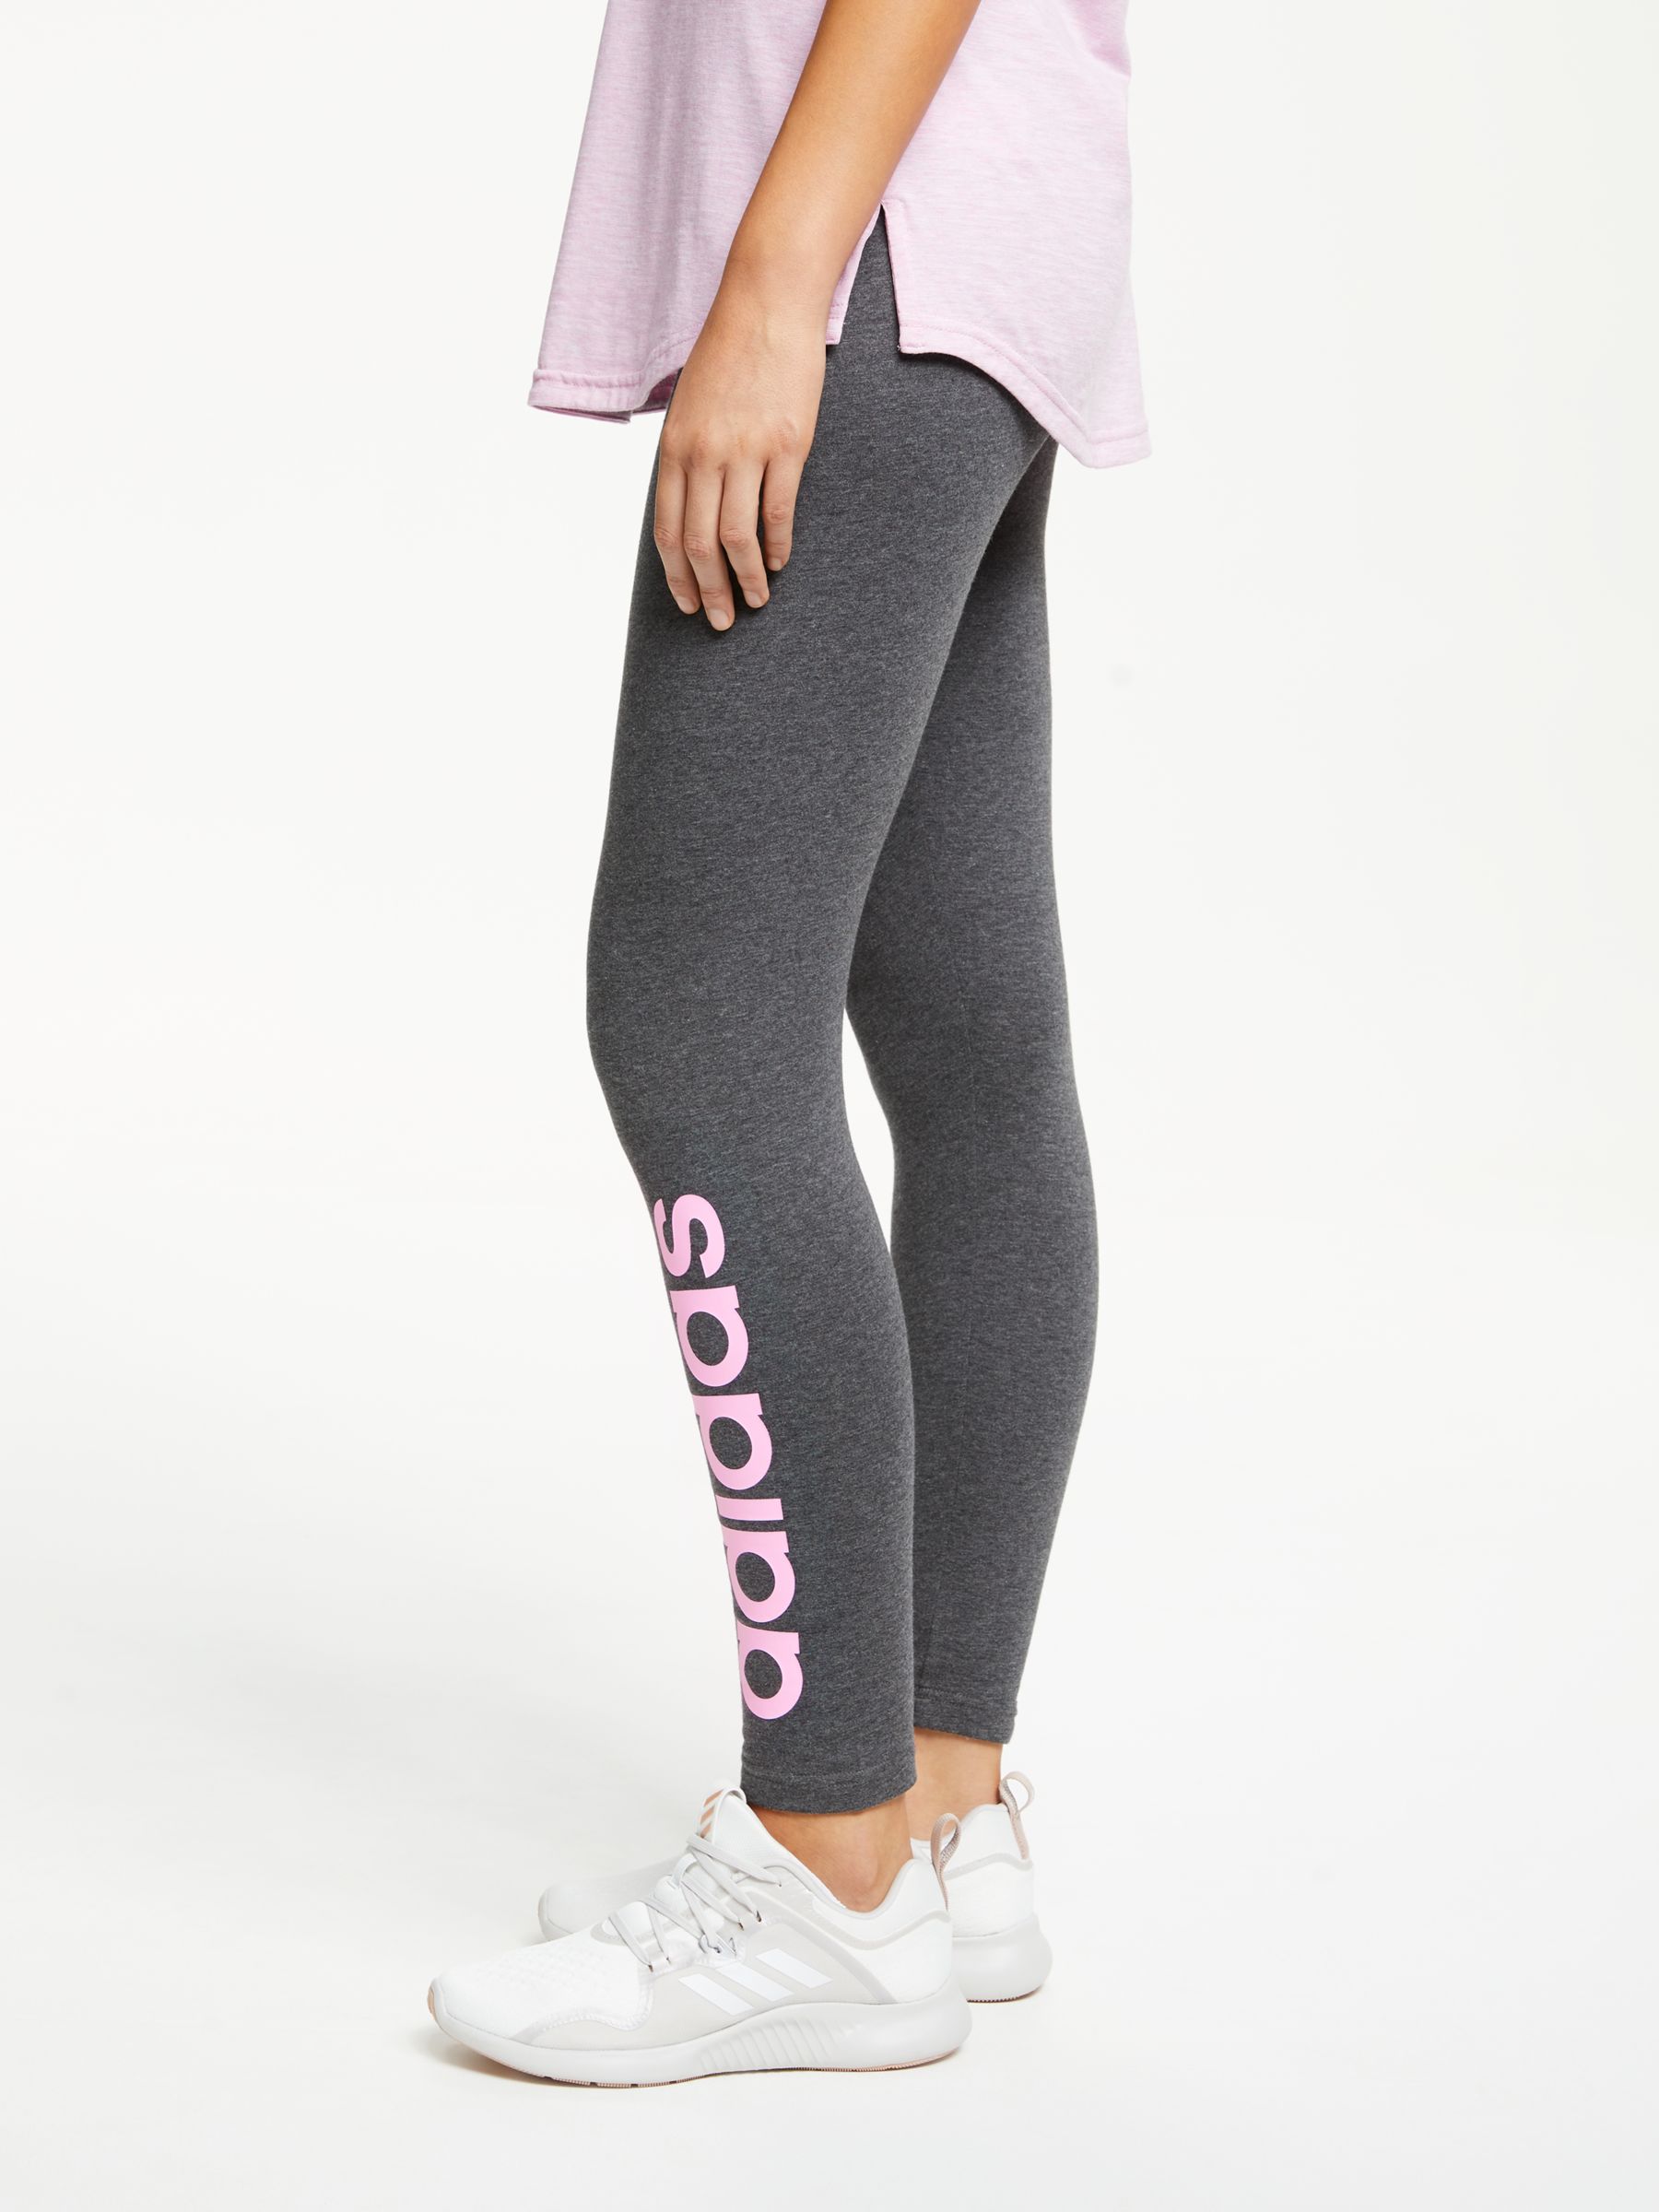 grey and pink adidas leggings